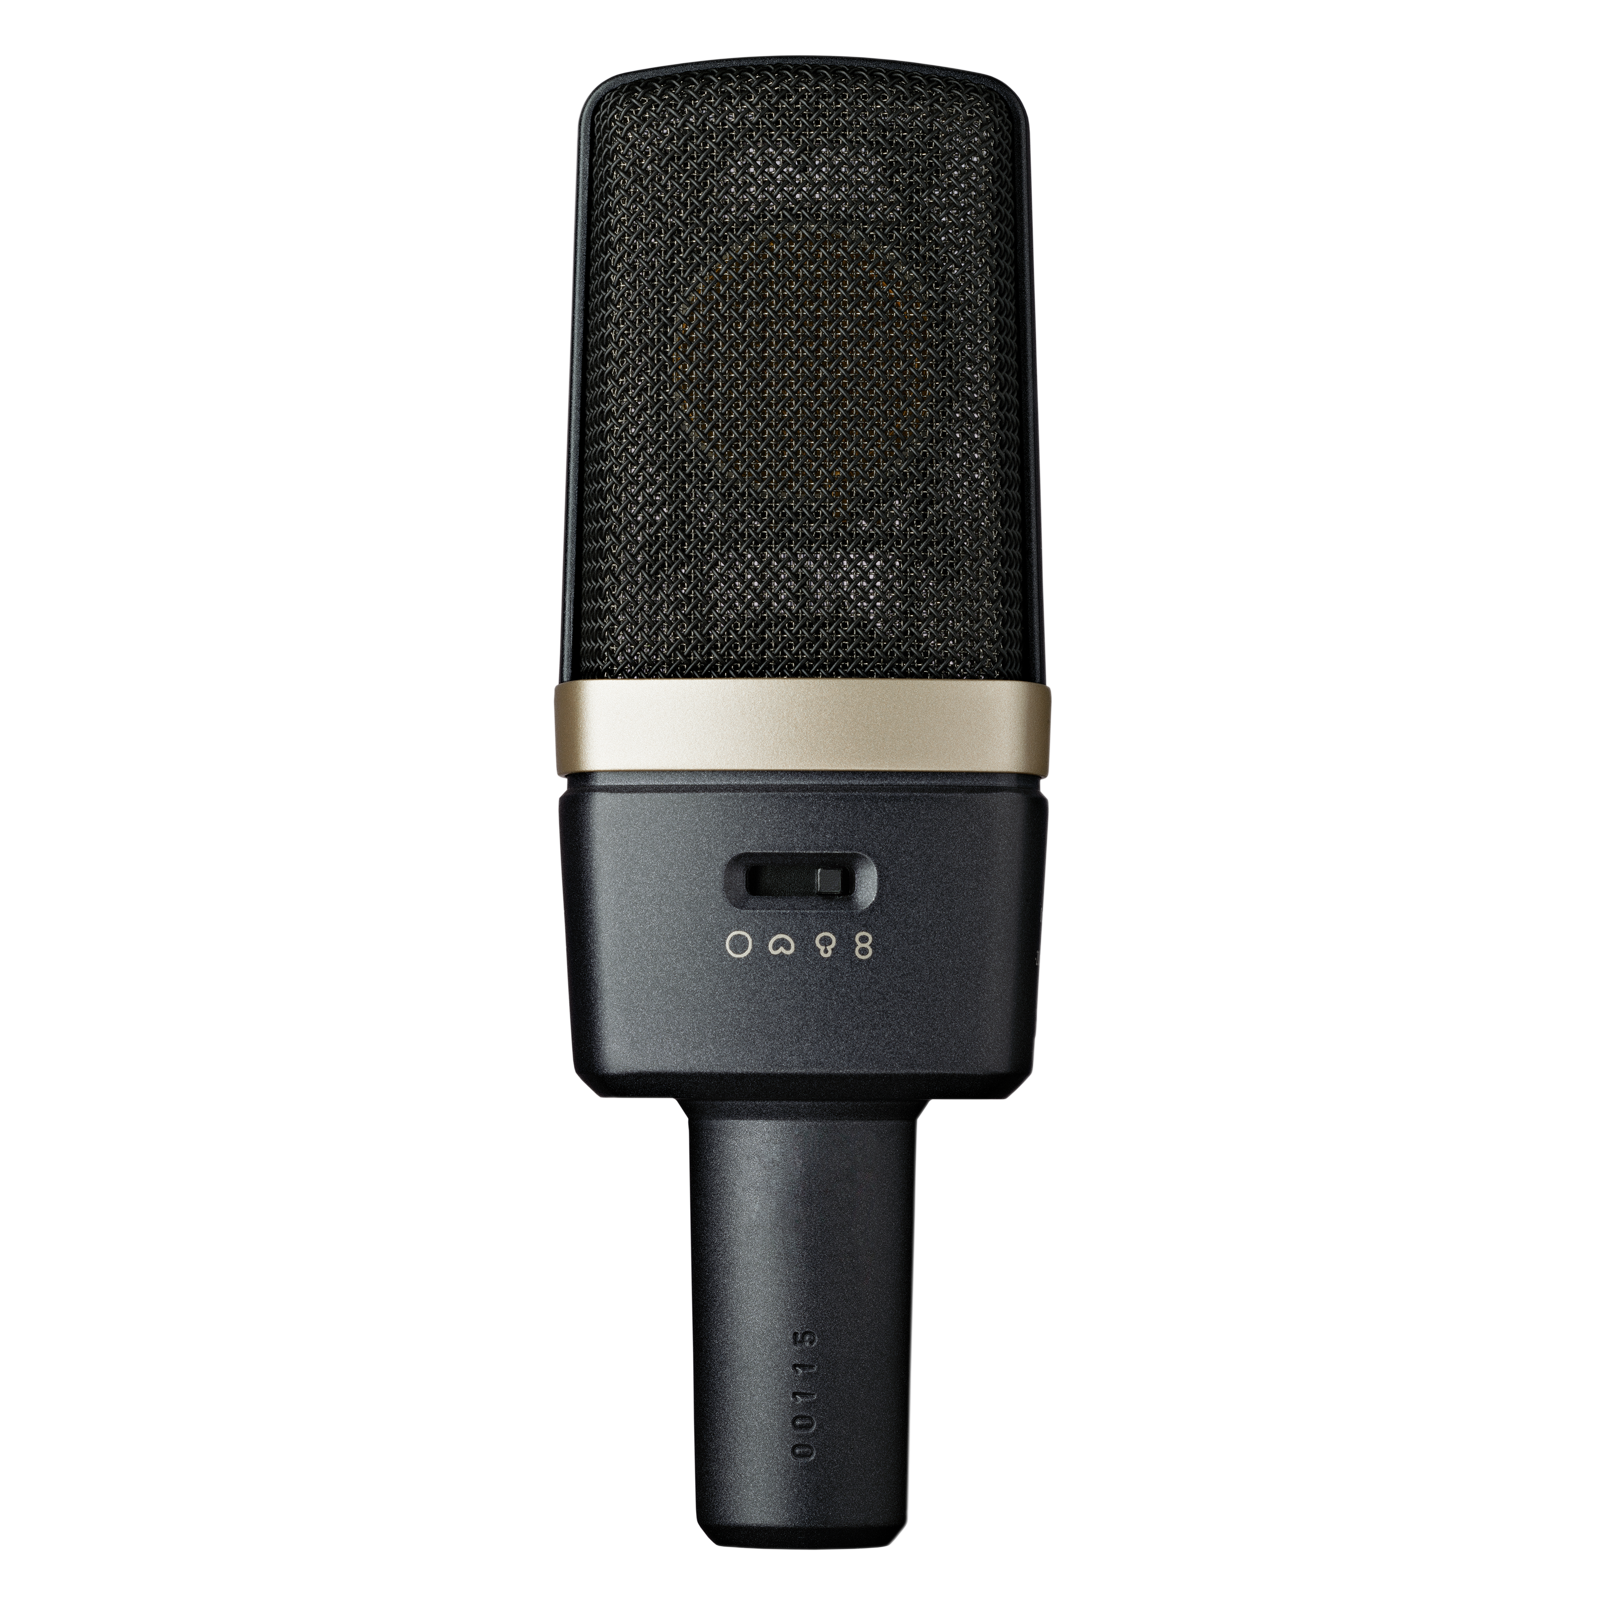 C314 (B-Stock) - Black - Professional multi-pattern condenser microphone - Back